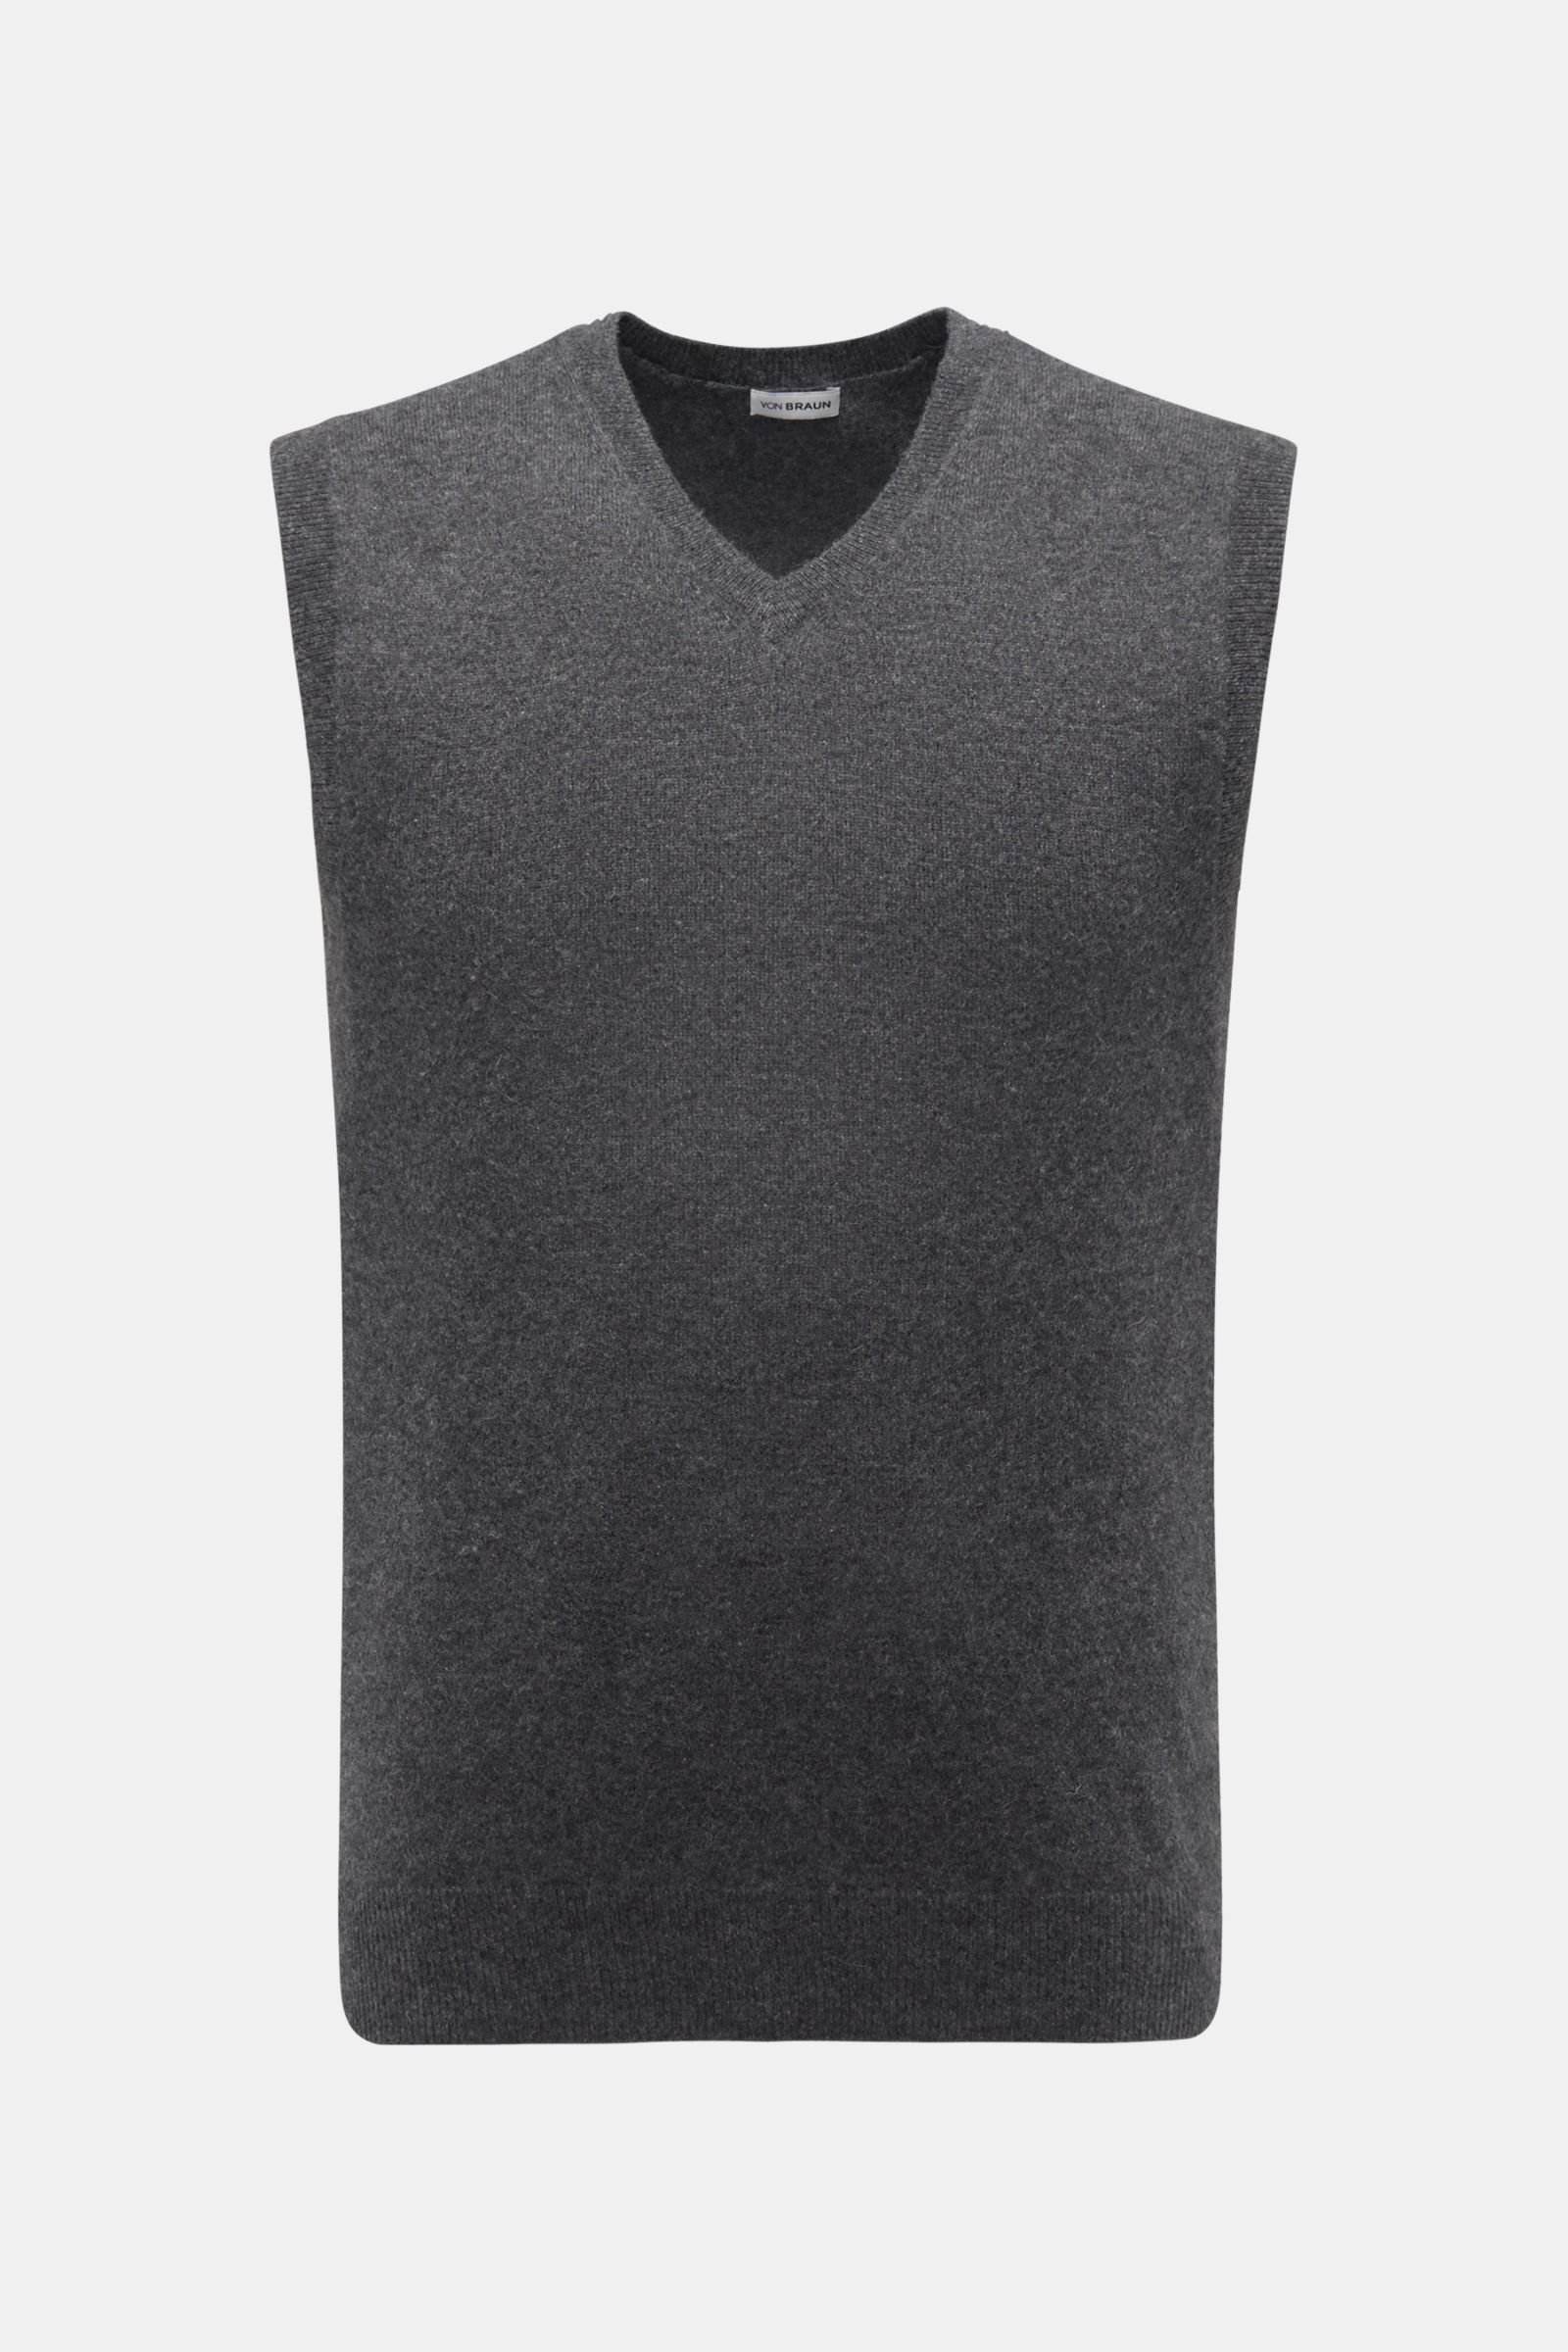 Cashmere V-neck sweater vest anthracite